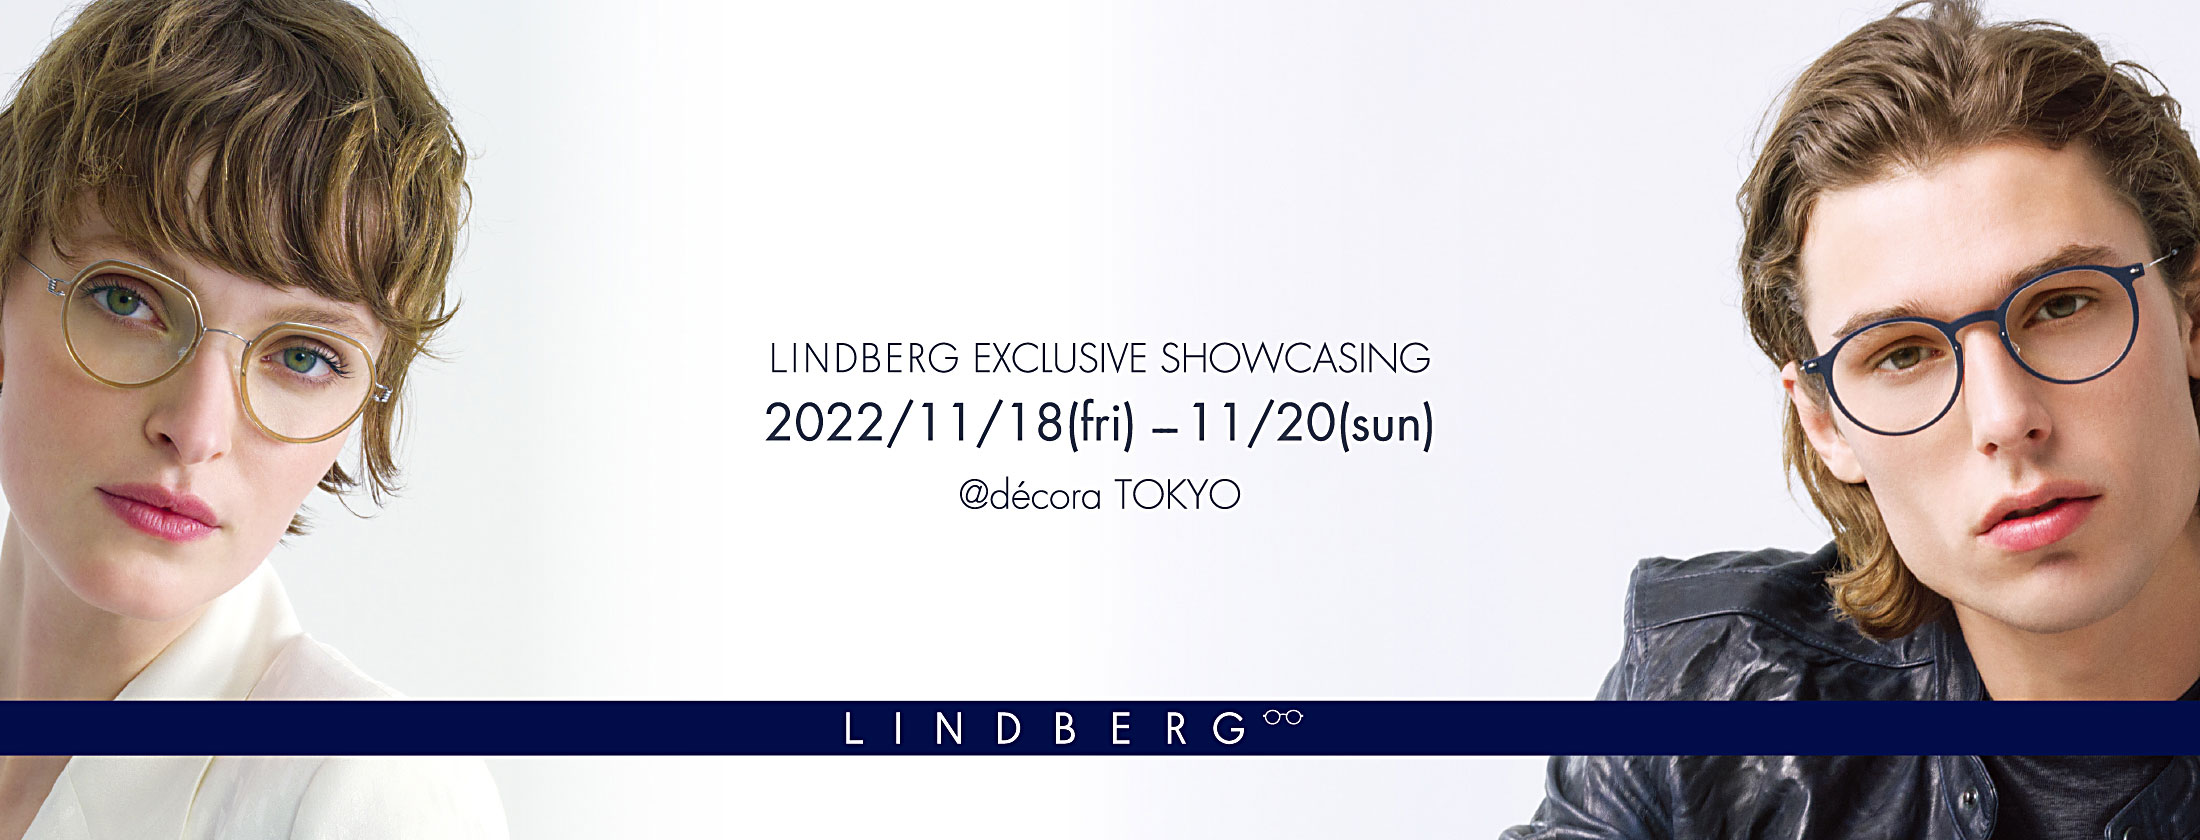 LINDBERG EXCLUSIVE SHOWCASING @decora TOKYO